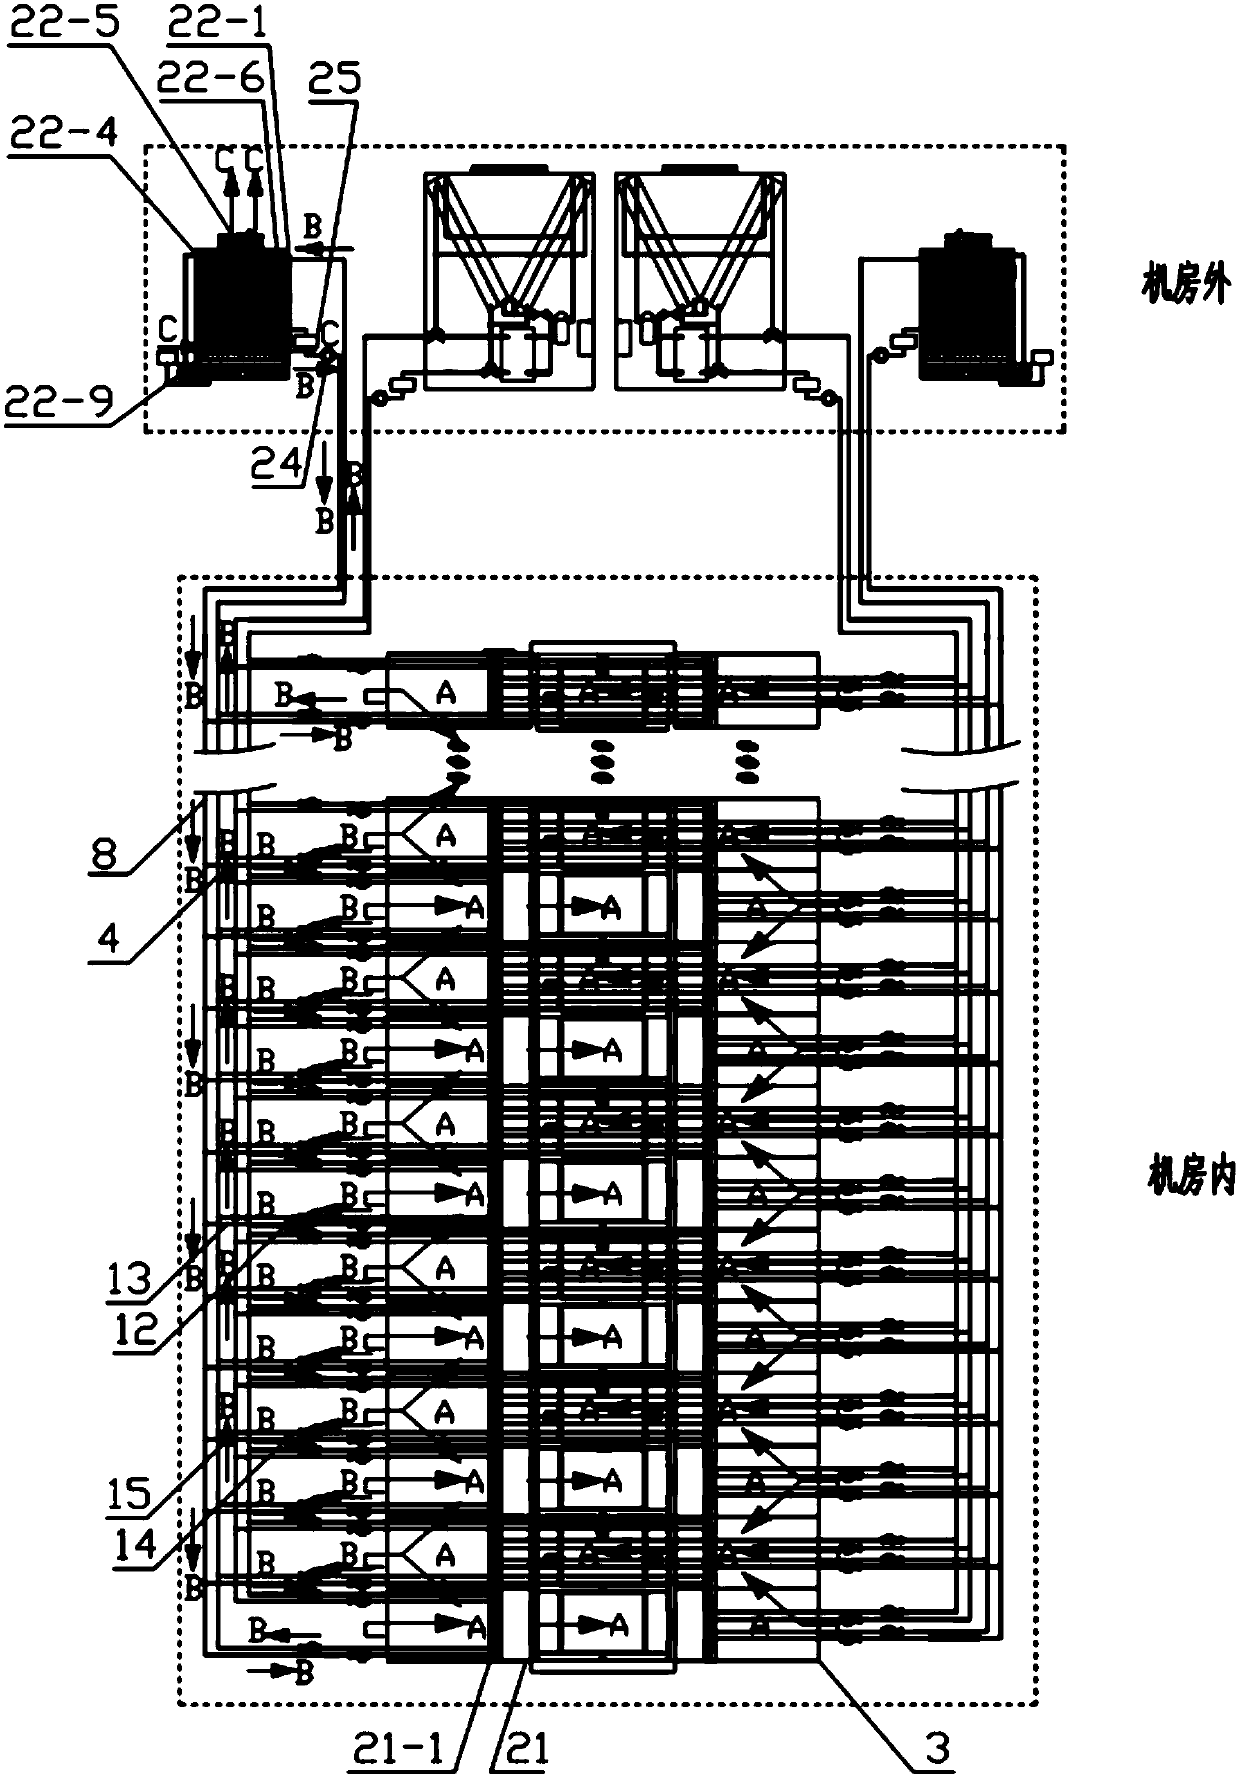 Double-circulation type overhead heat pipe micro-module